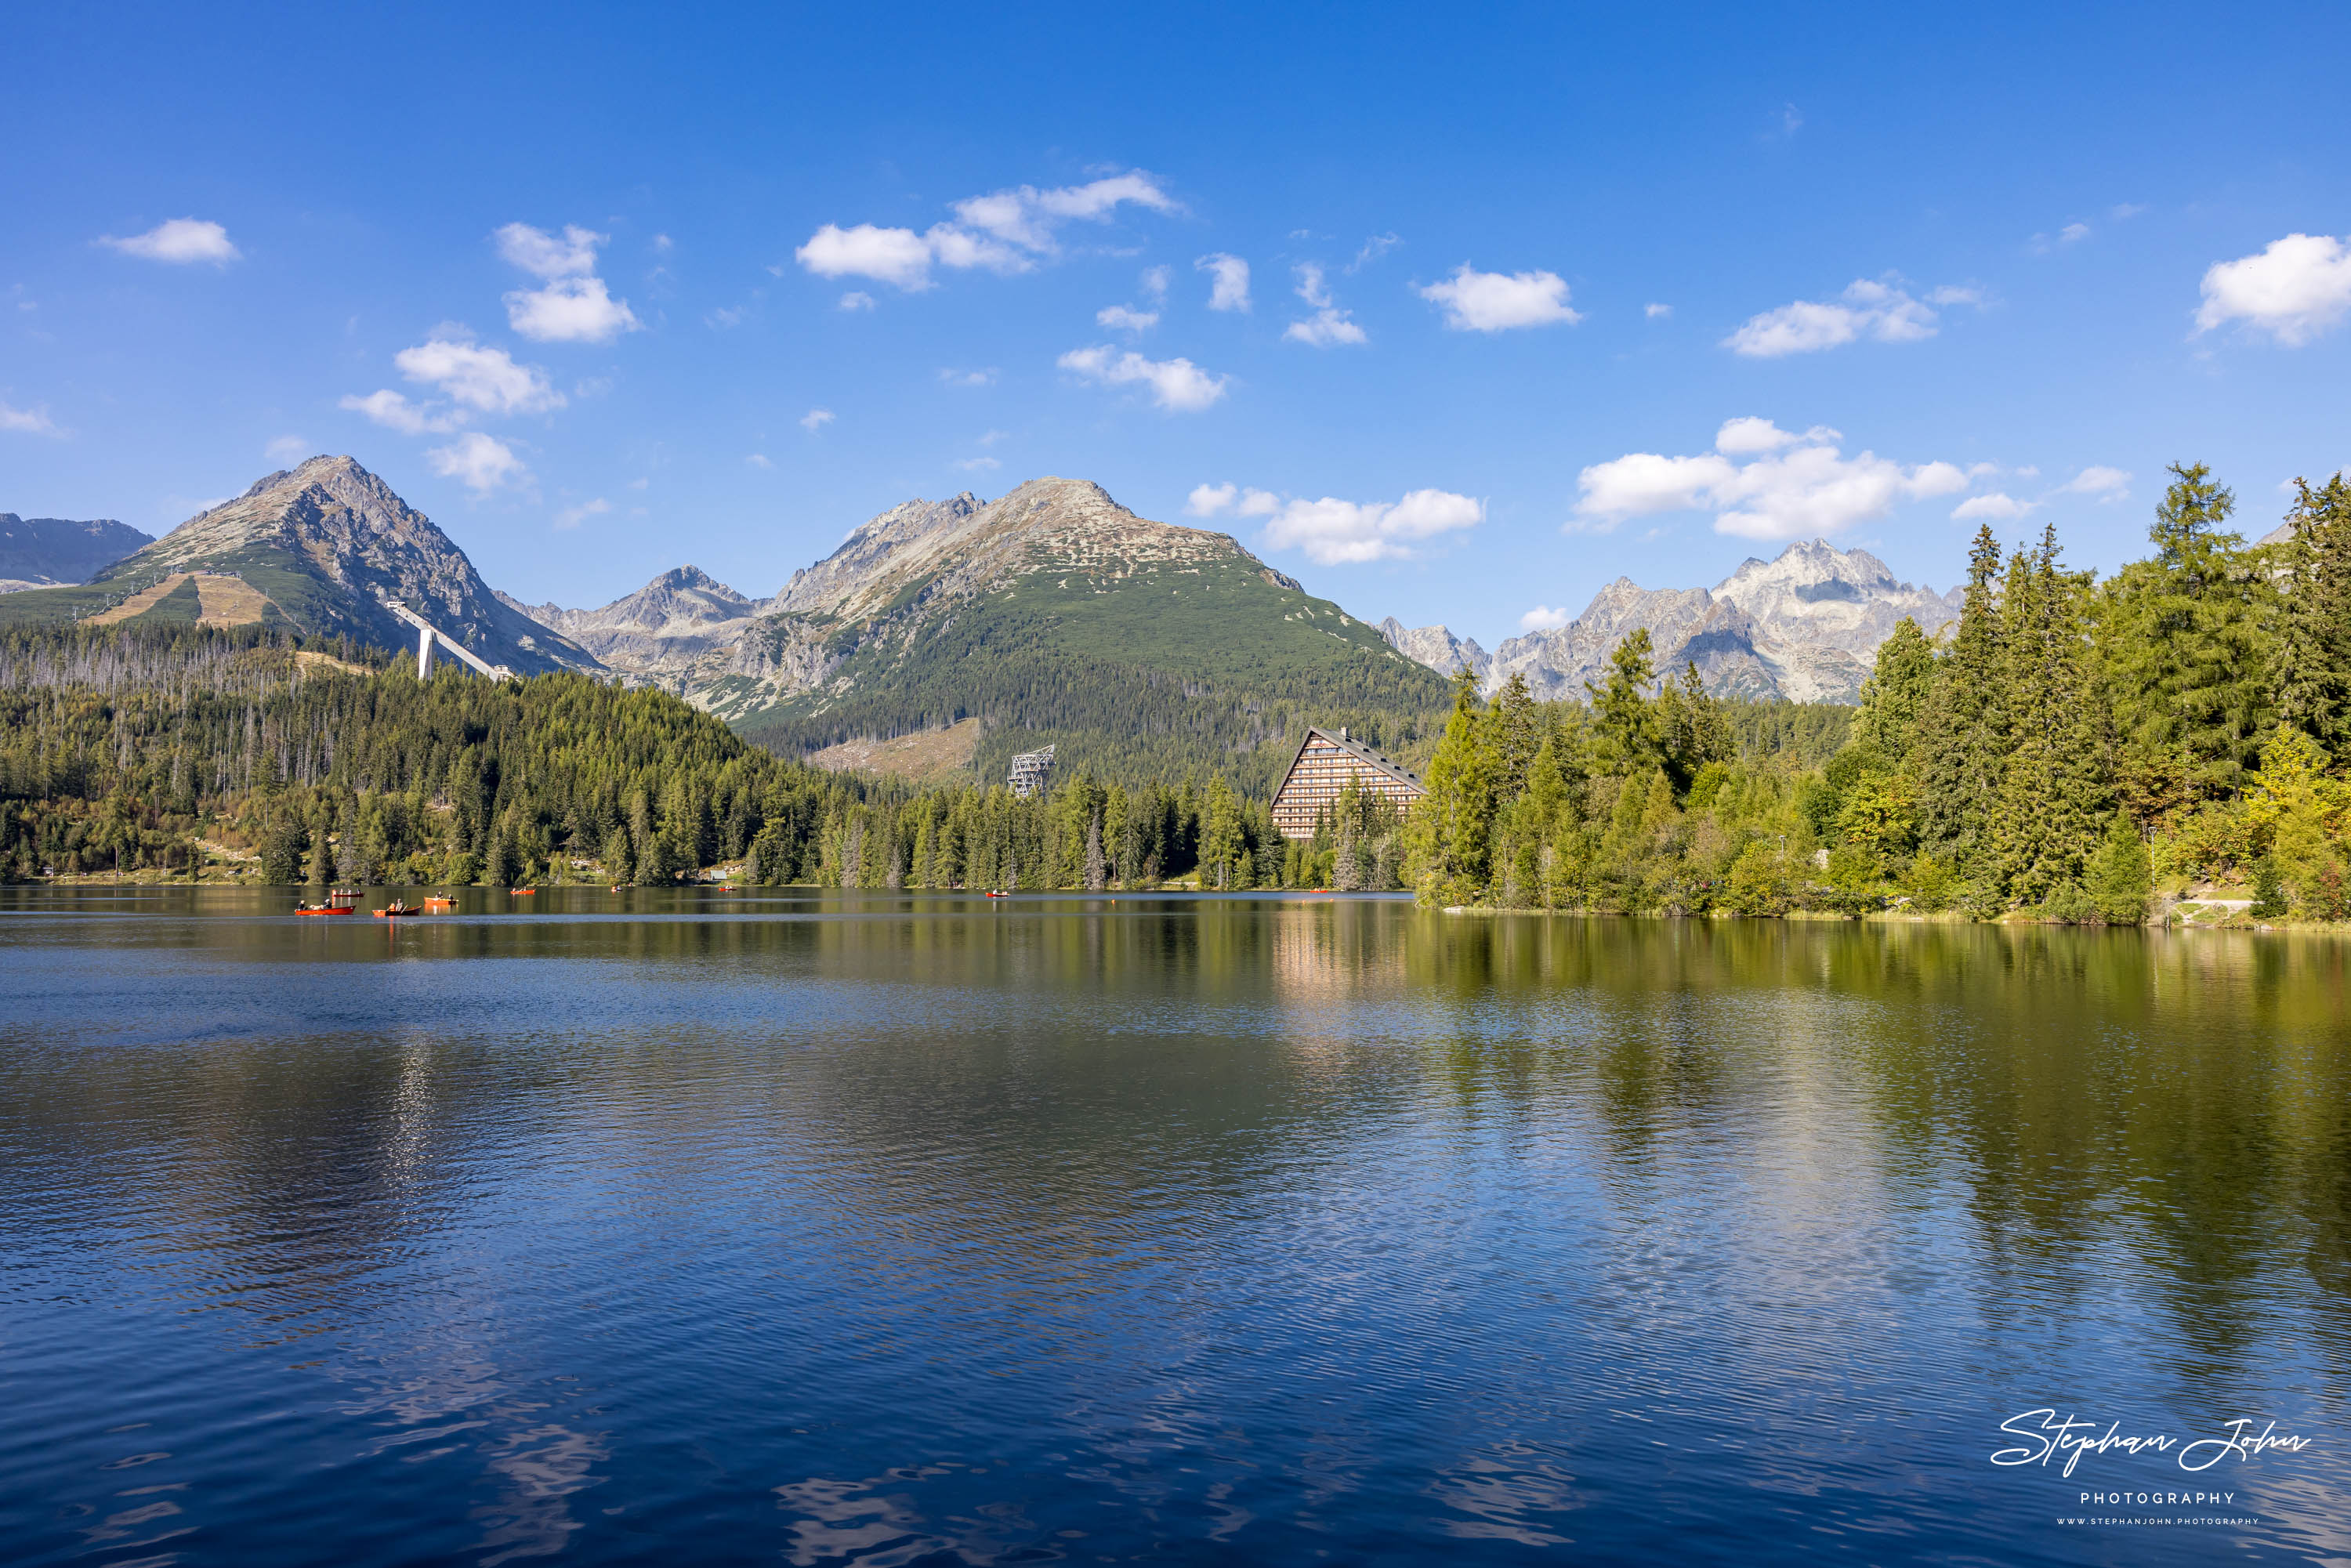 Der Štrbské Pleso (Tschirmer See) in der Hohen Tatra